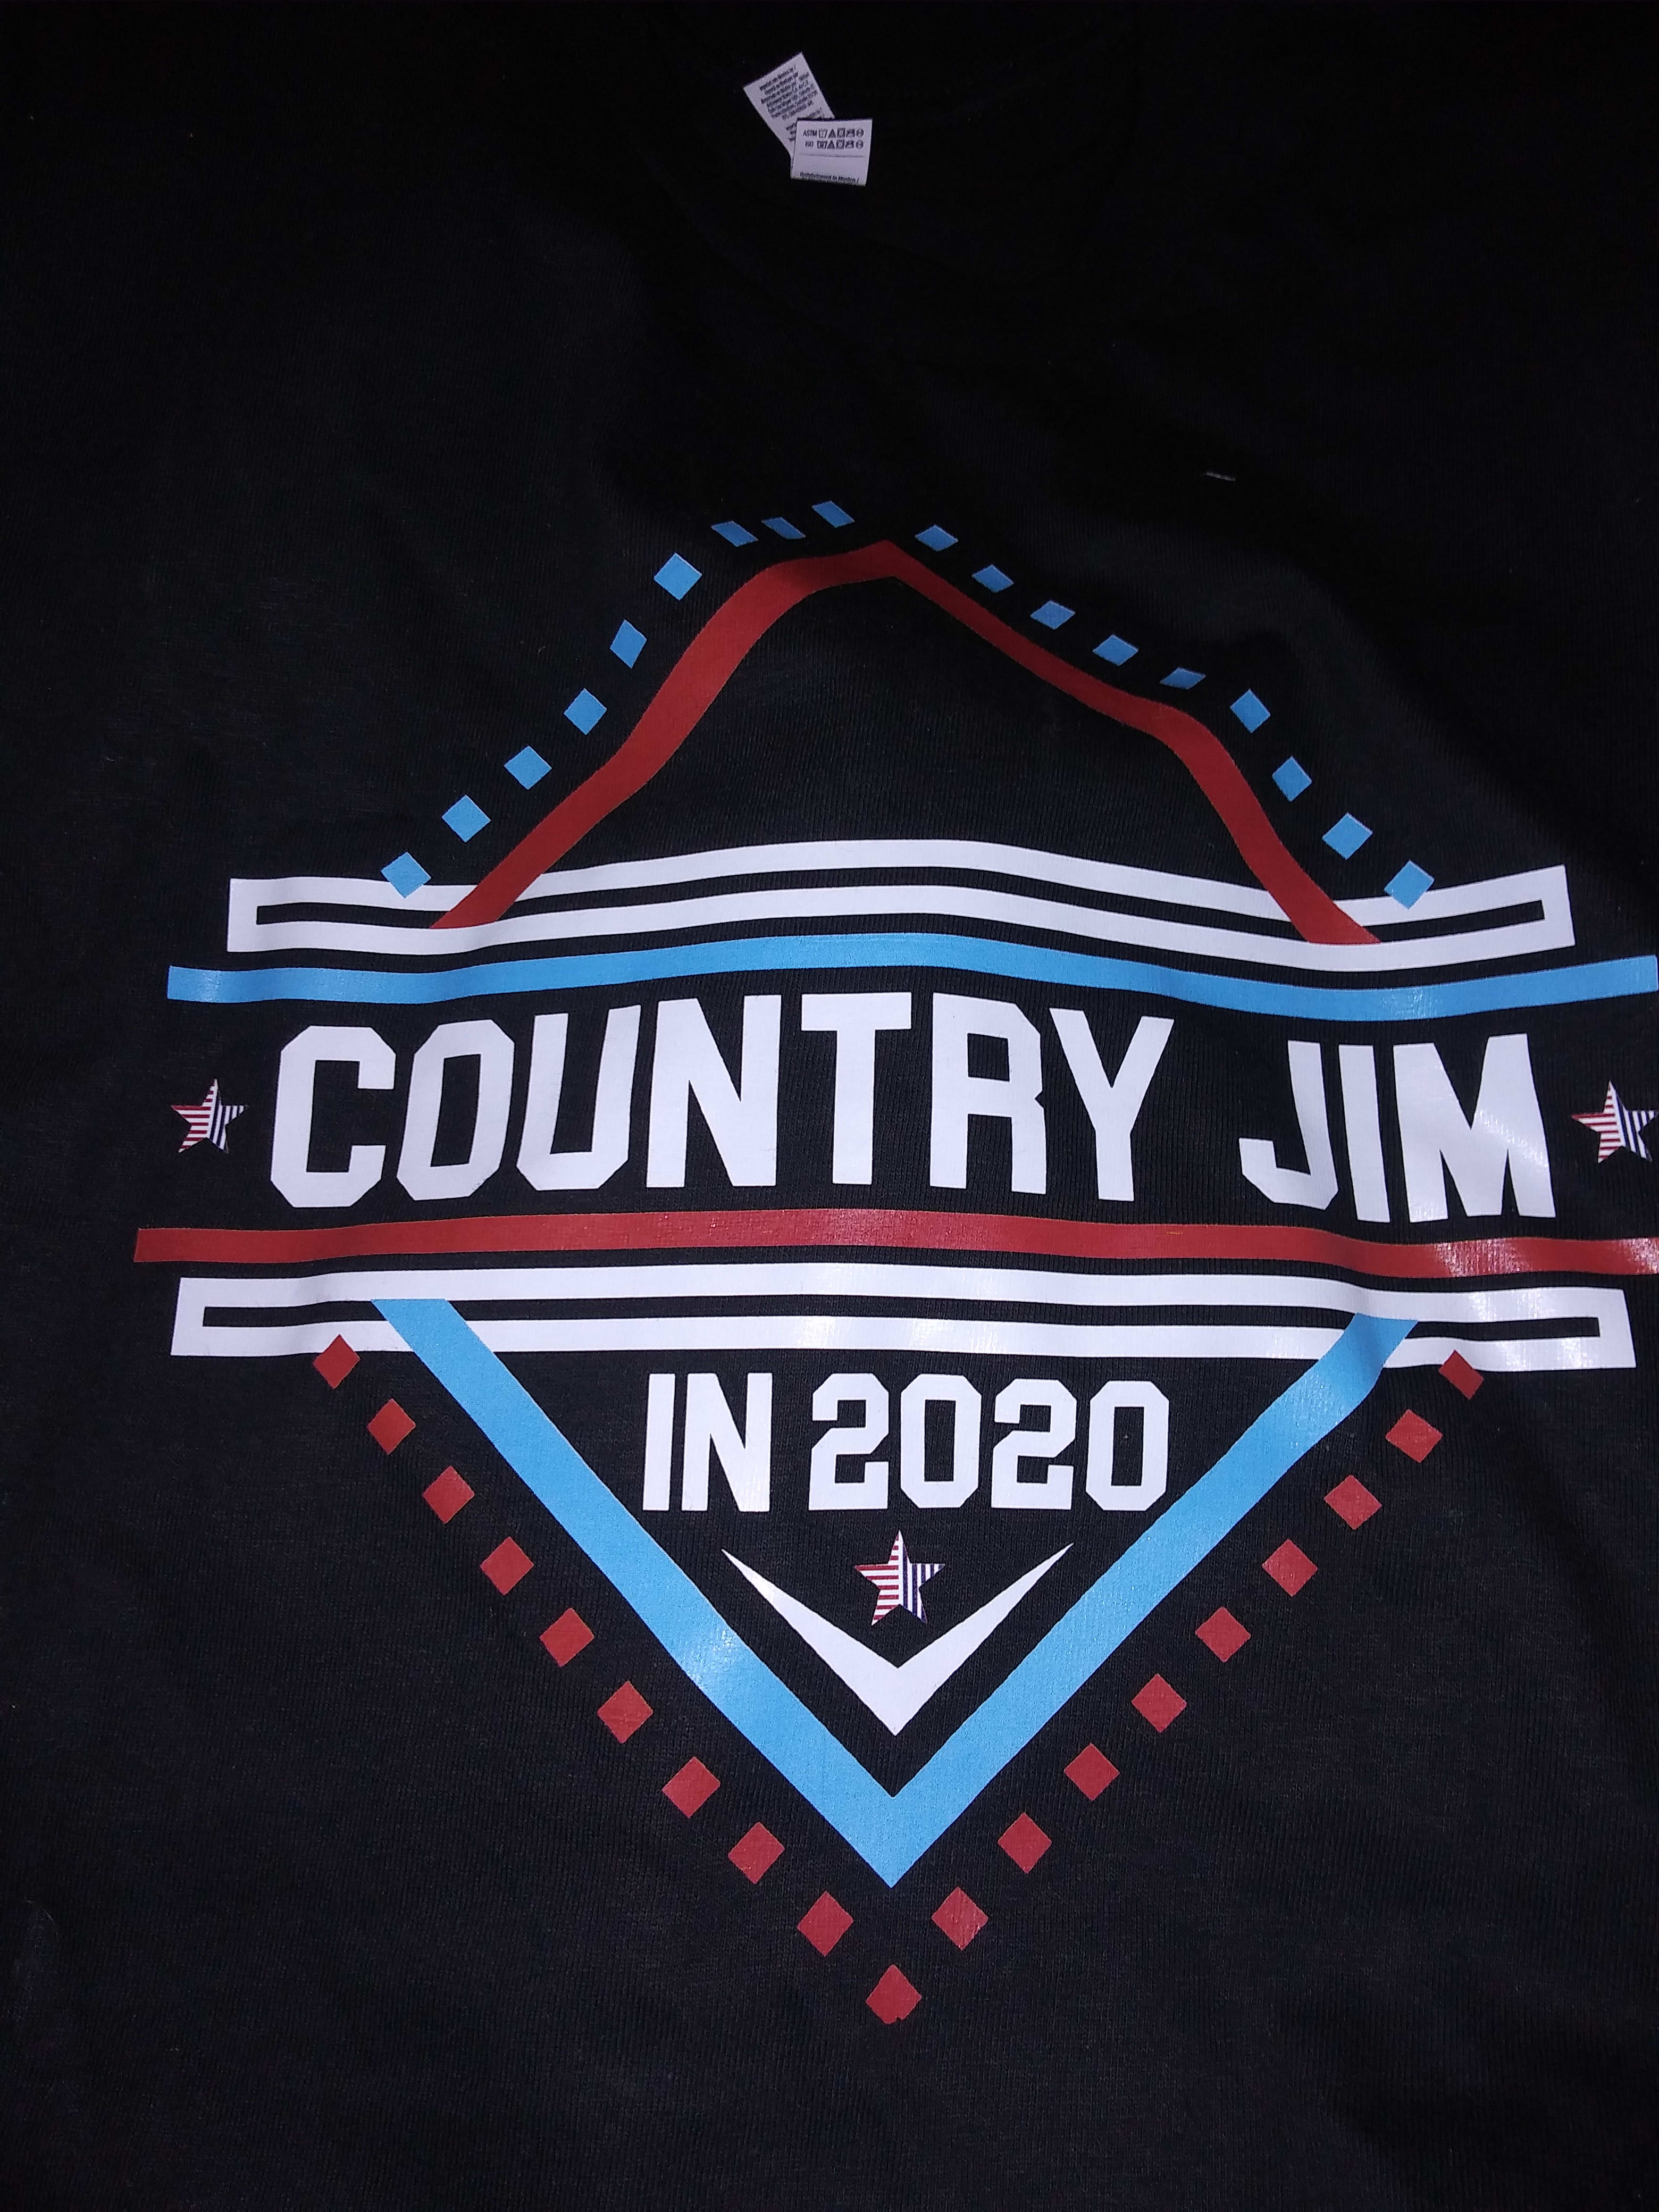 Country Jim